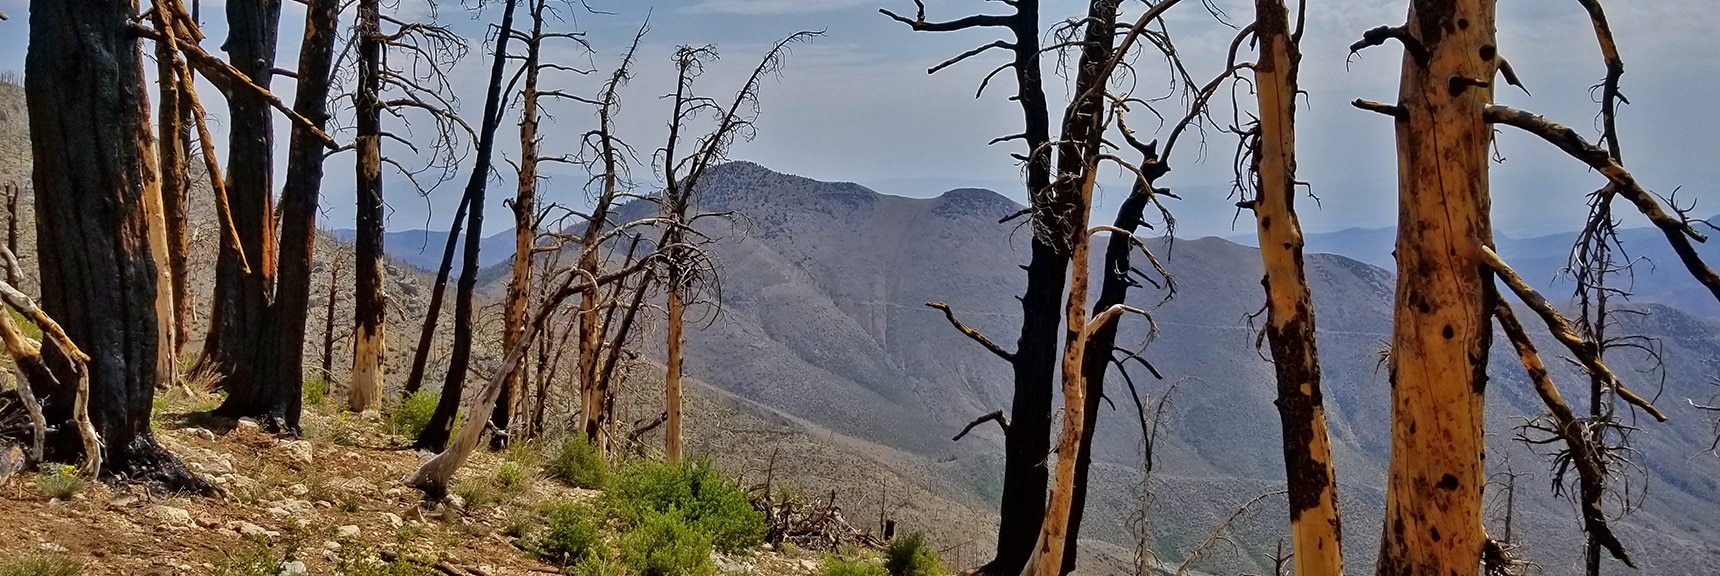 Harris Mountain Viewed from About 1,500ft Below Griffith Peak on Sexton Ridge. | Sexton Ridge Descent from Griffith Peak, Mt. Charleston Wilderness, Spring Mountains, Nevada